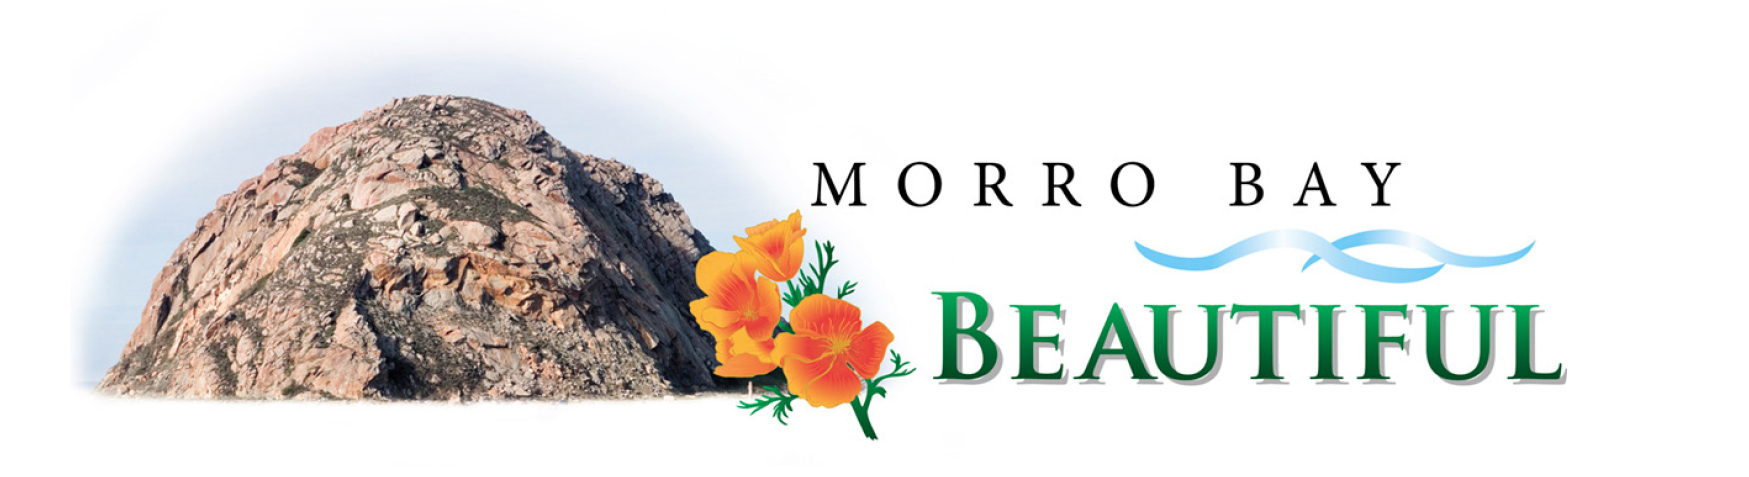 Morro Bay Beautiful logo